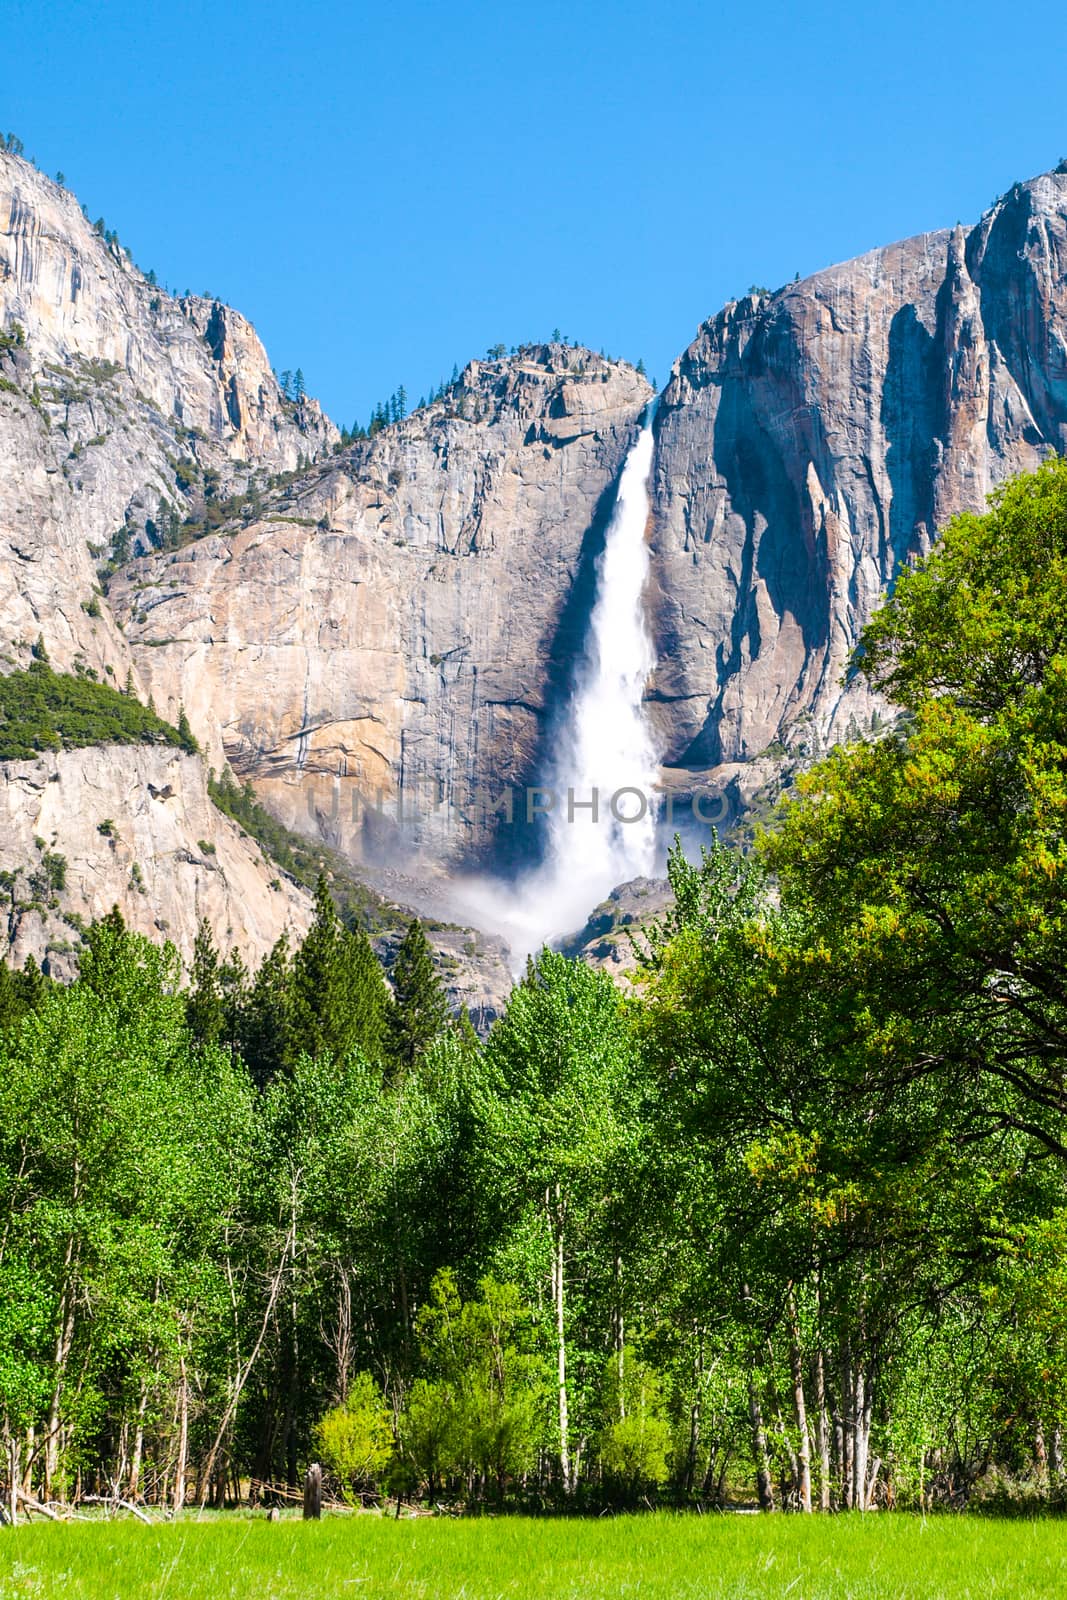 Upper Yosemite Fall, the highest waterfall in Yosemite National Park, California, USA.